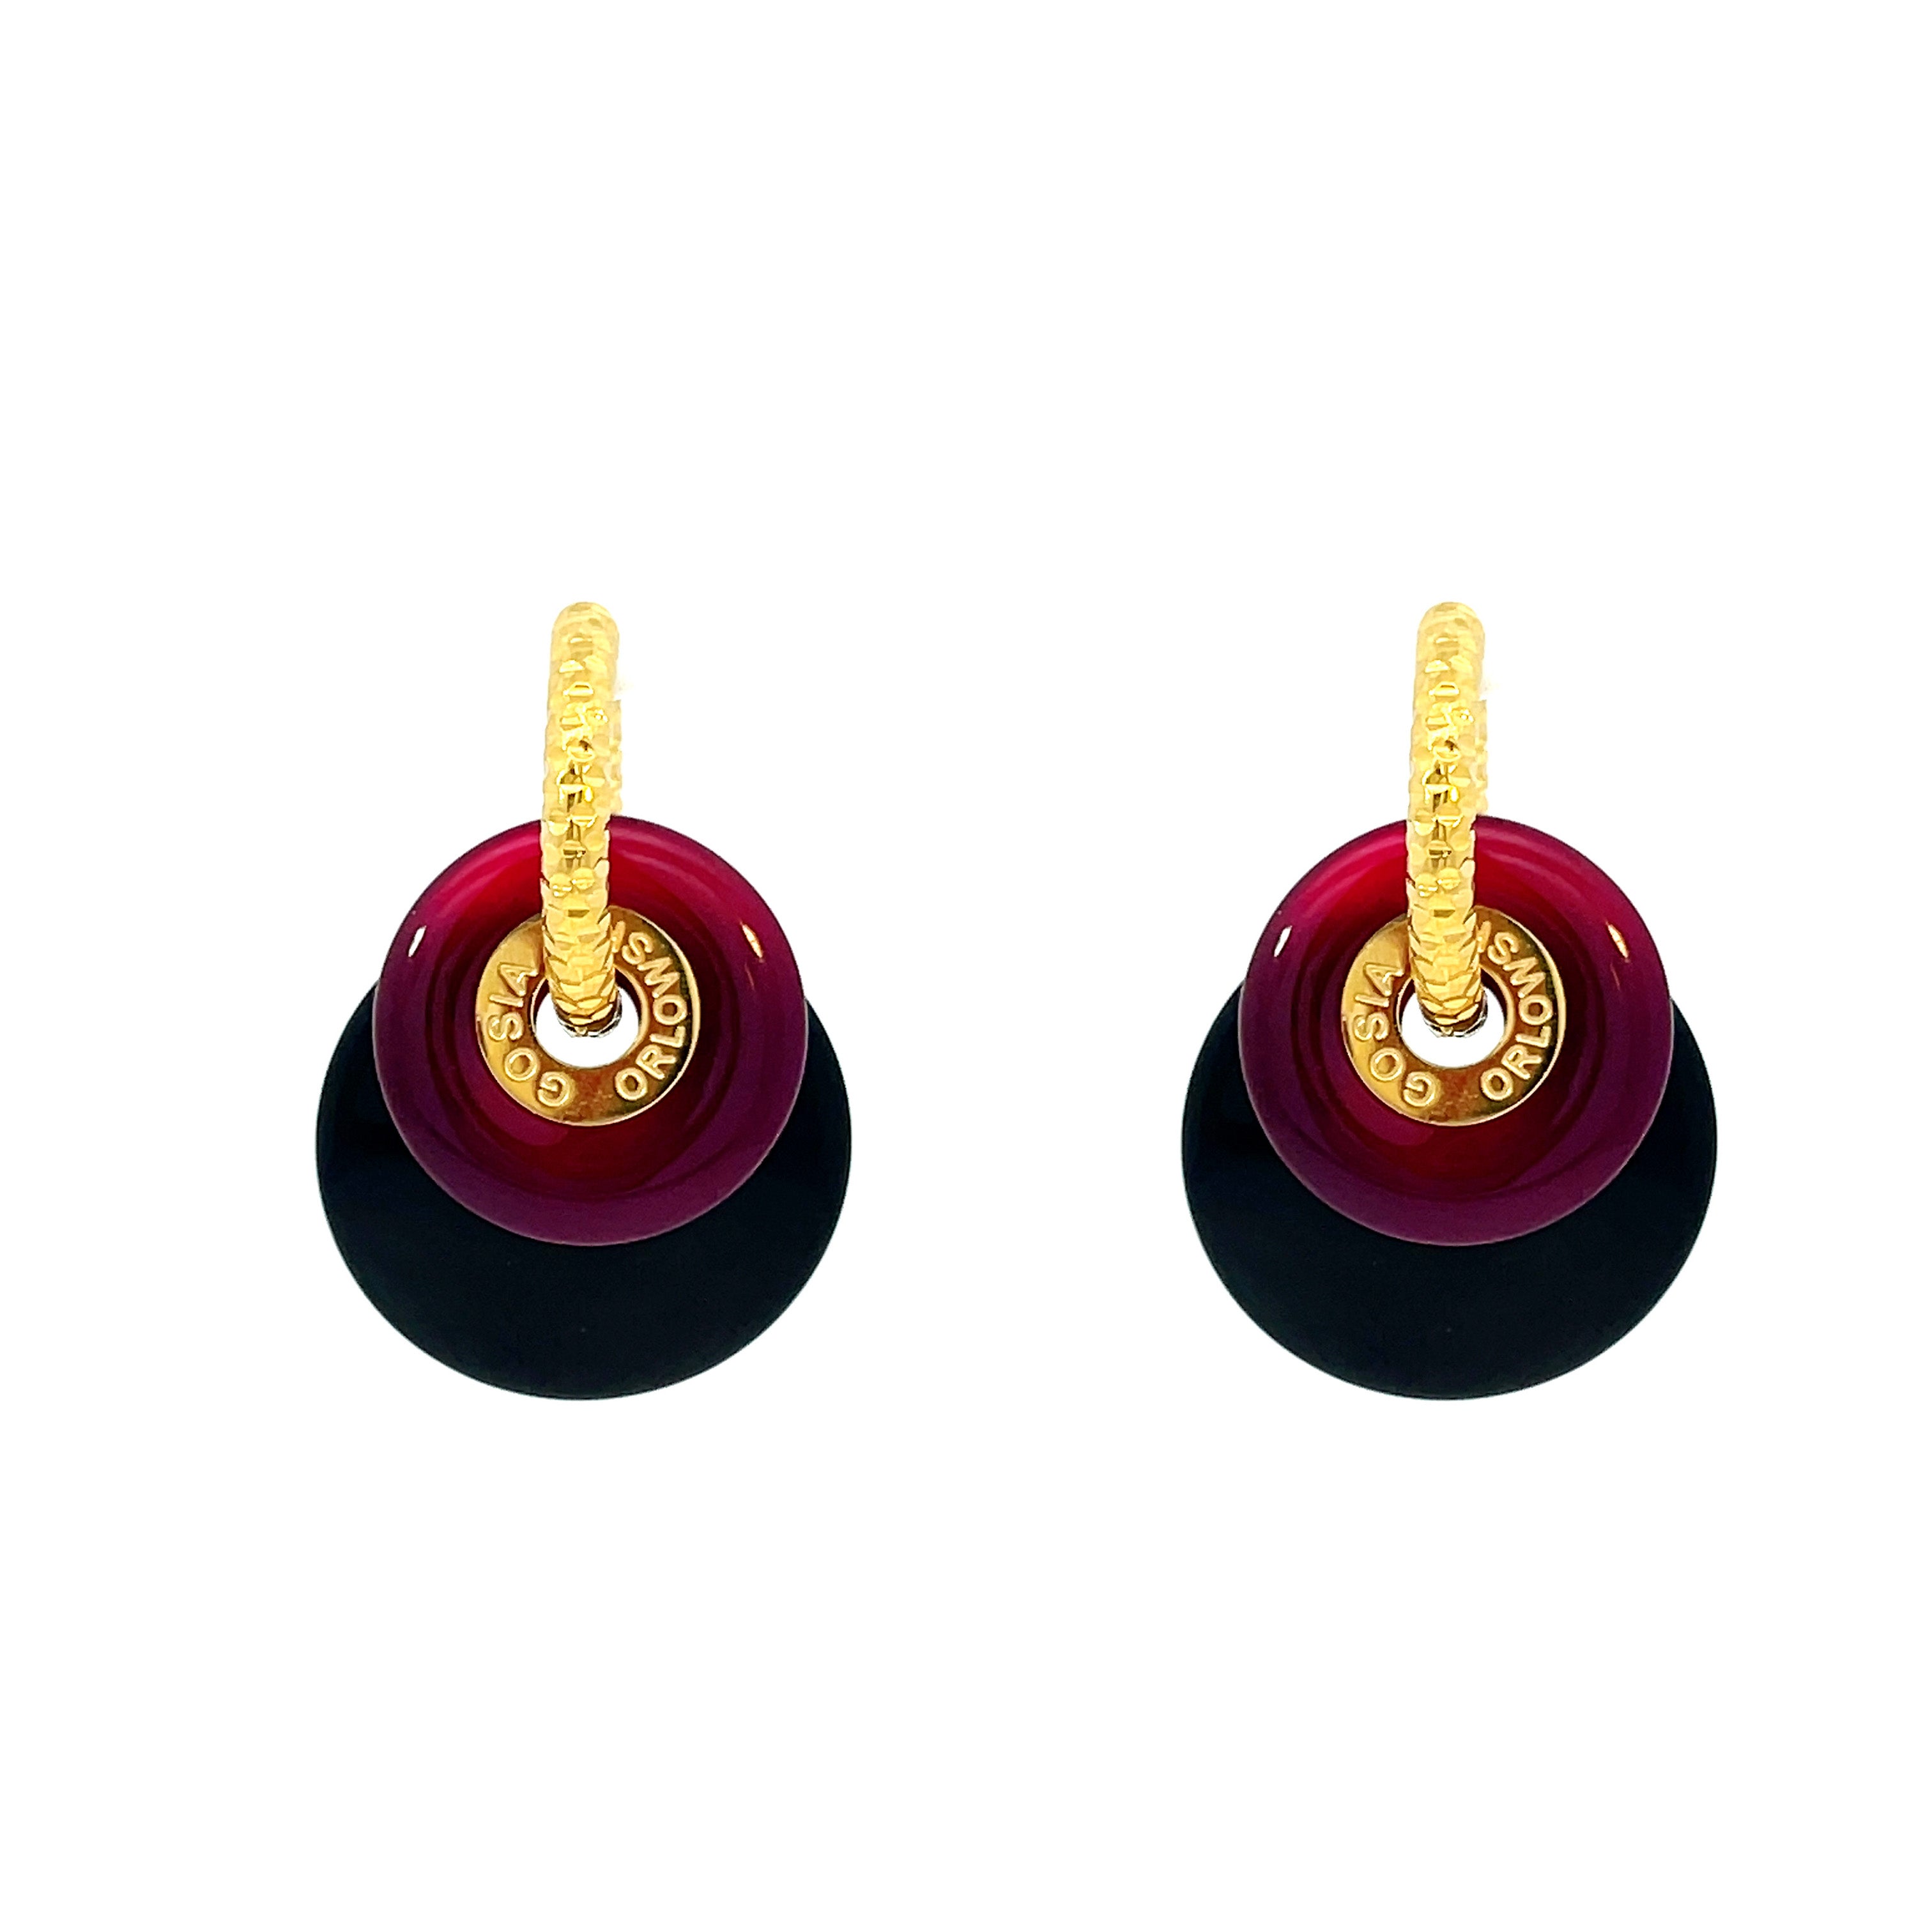 Stunning Black Onyx & Red Agate Earrings by Gosia Orlowska